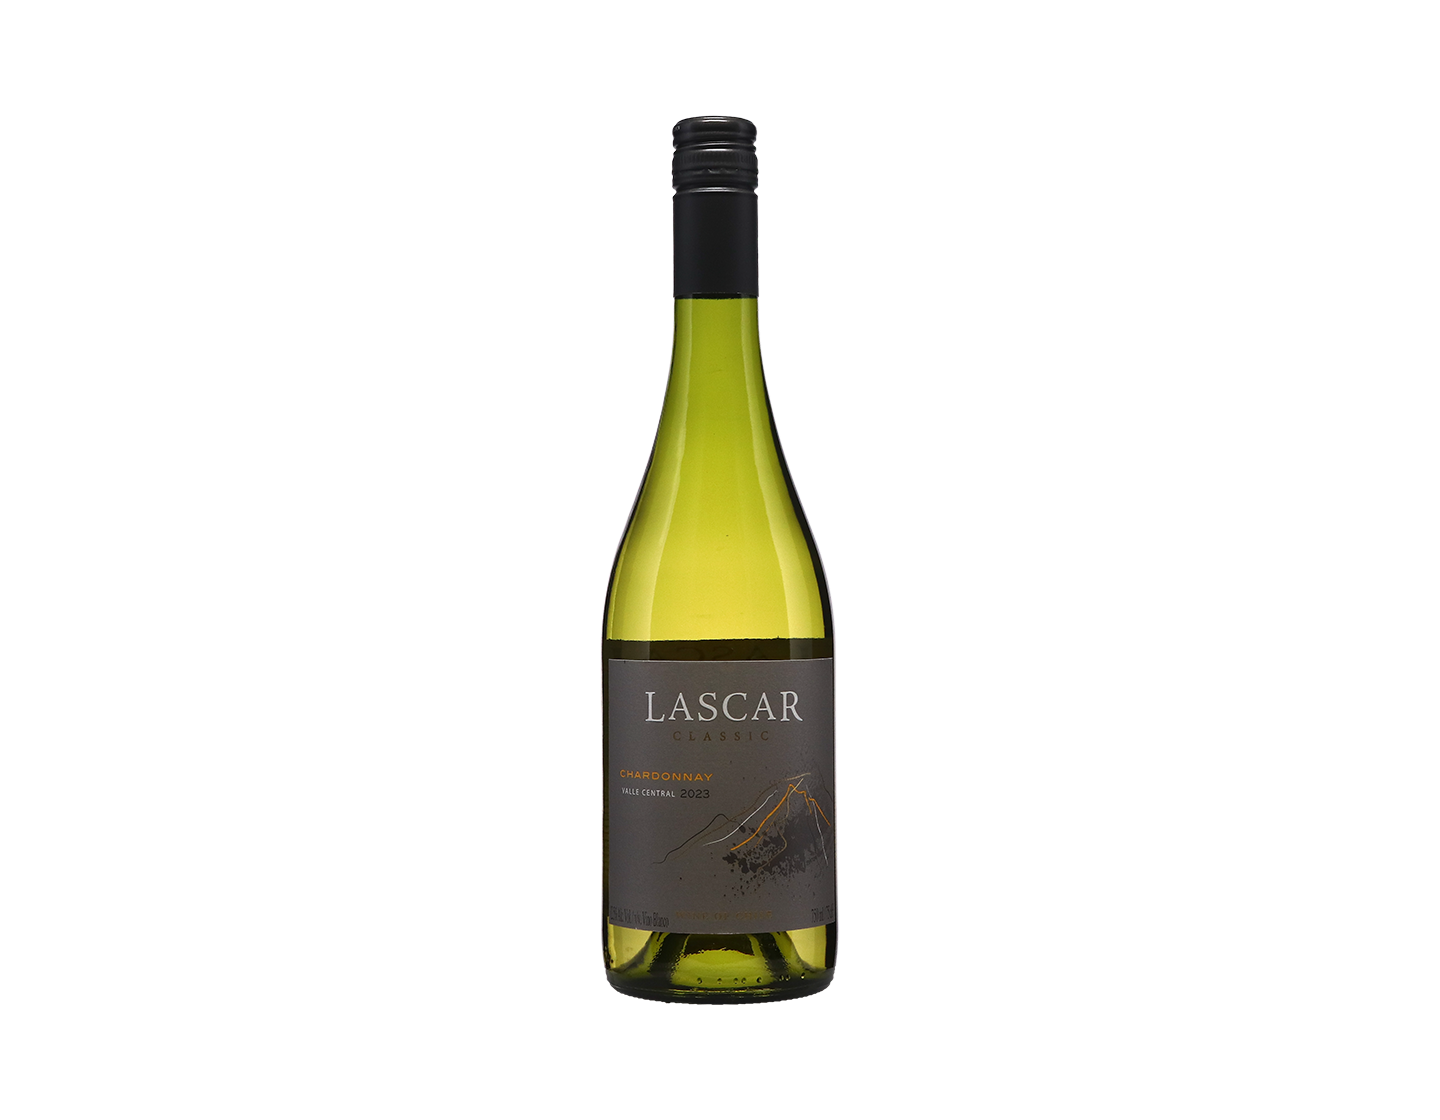 Pre-order Lascar Classic Valle Central Chardonnay (White wine)